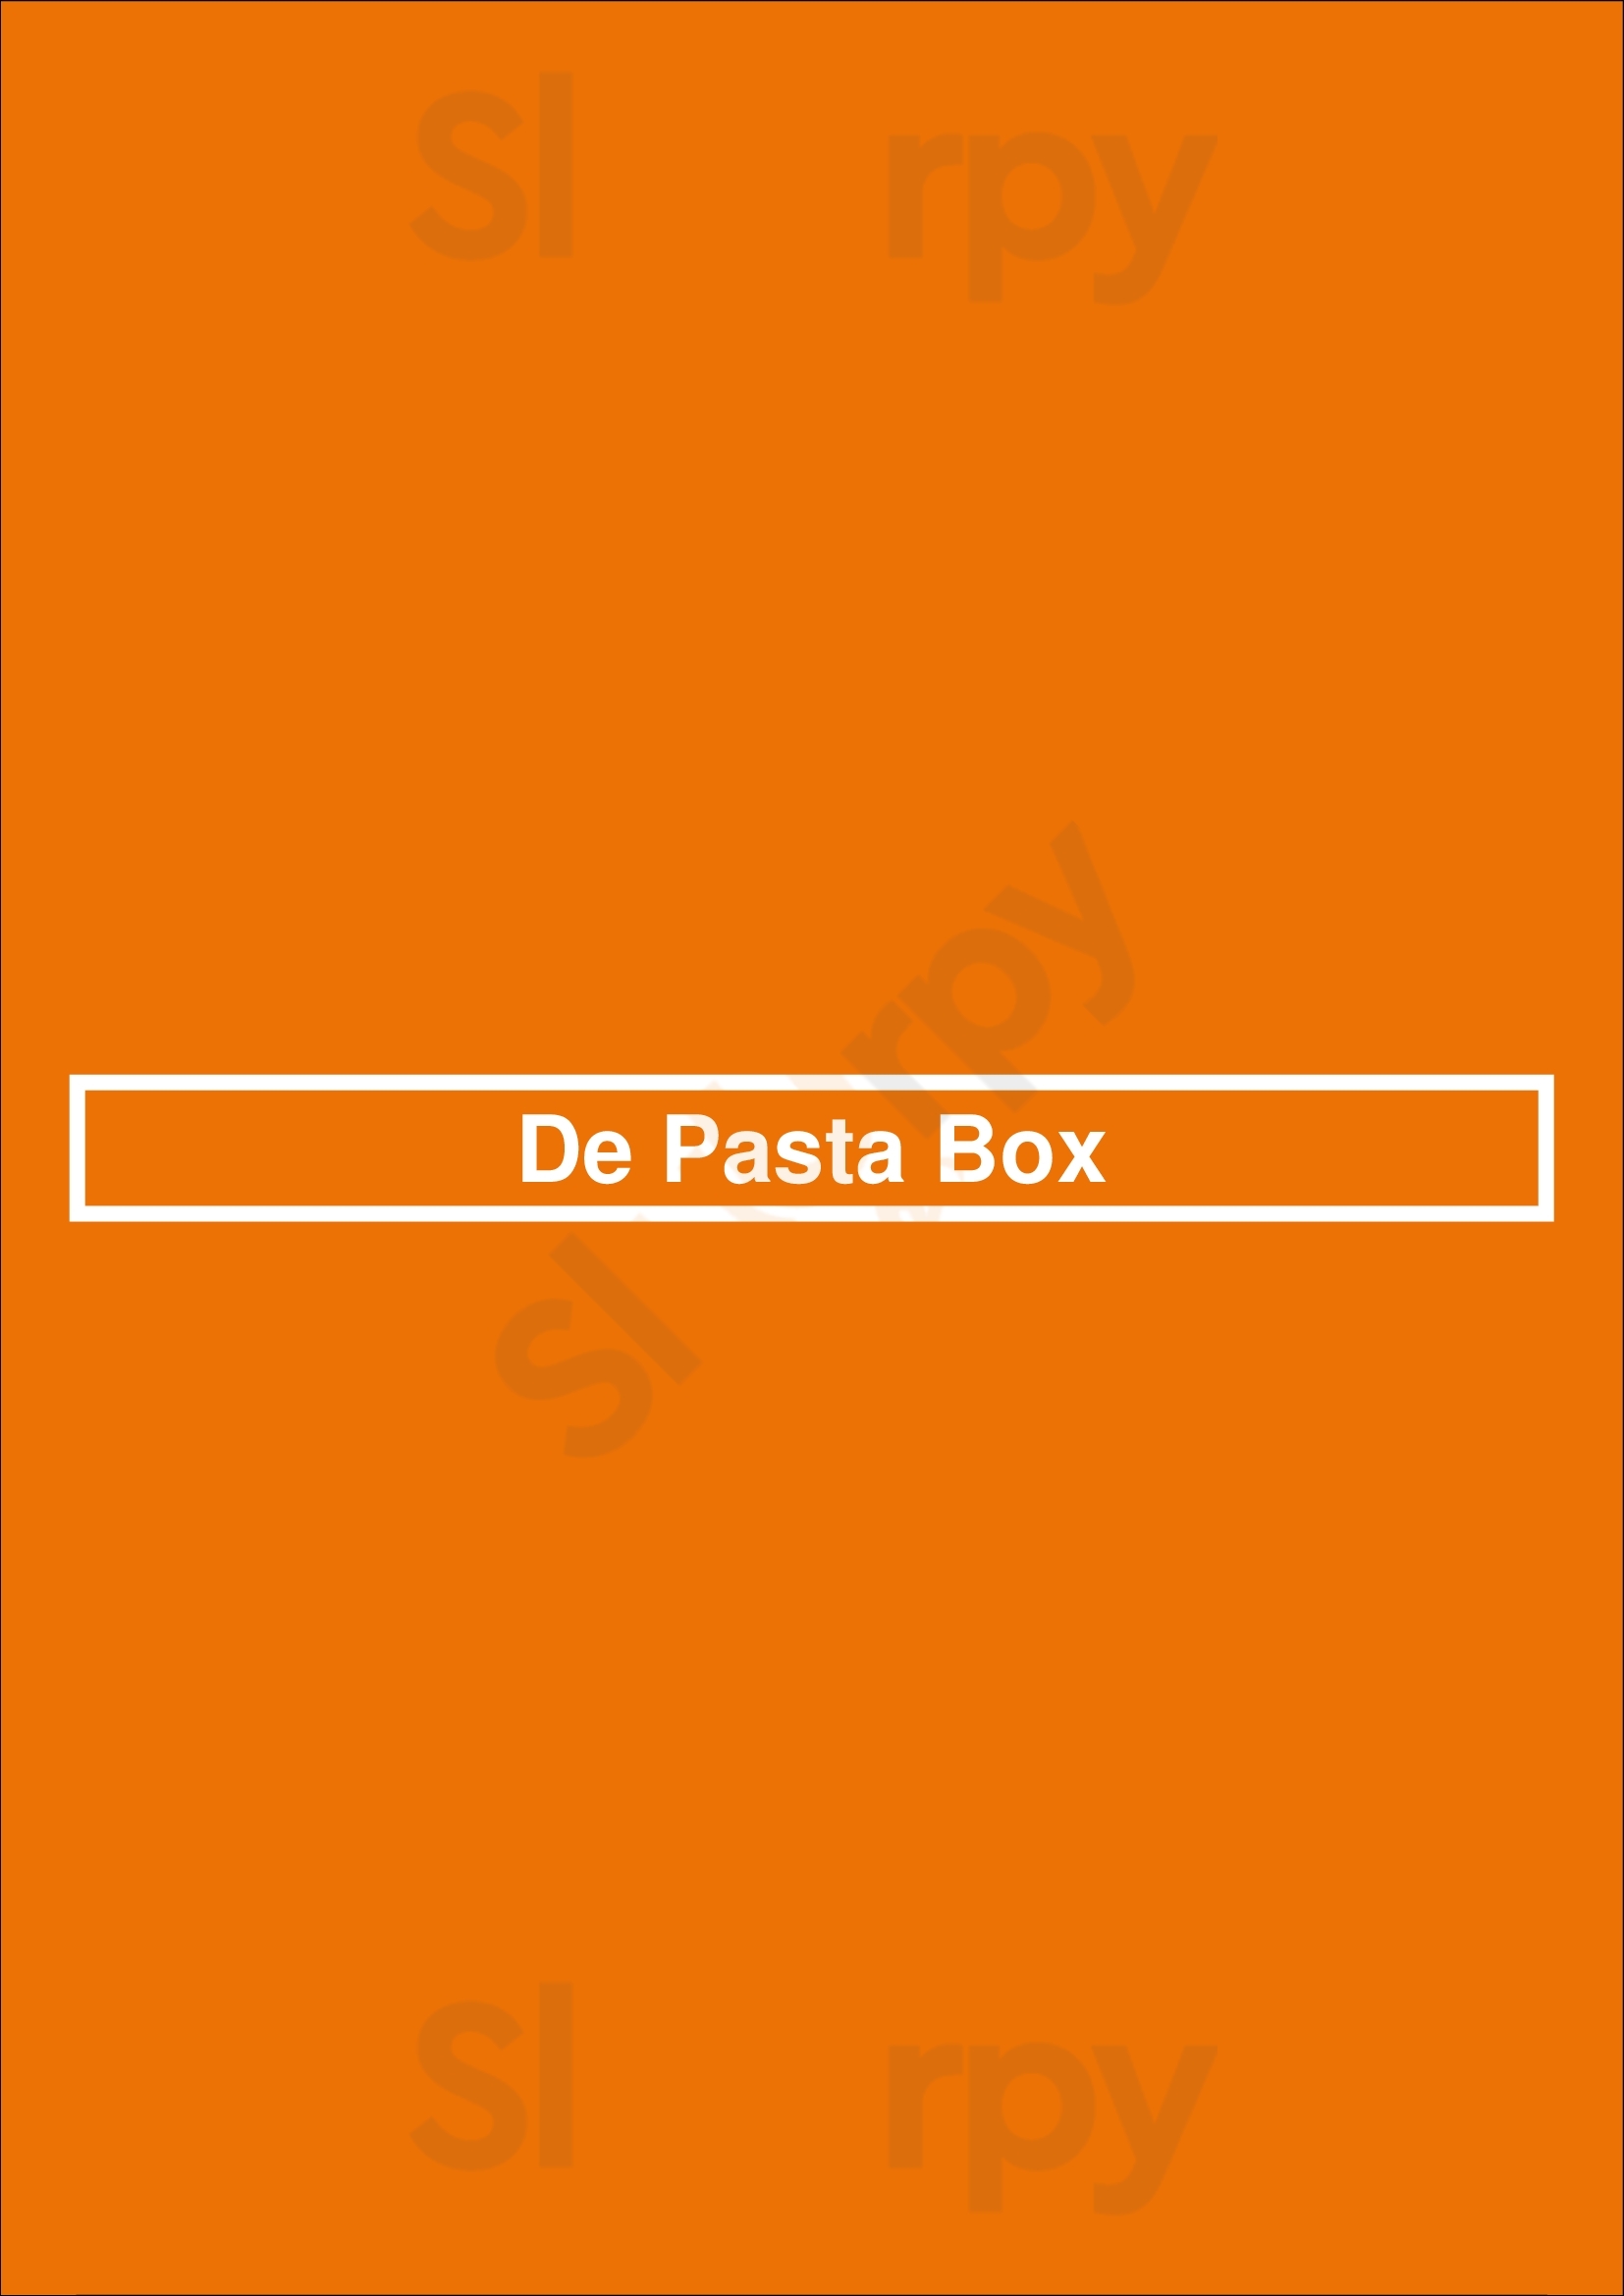 De Pasta Box Heemstede Menu - 1